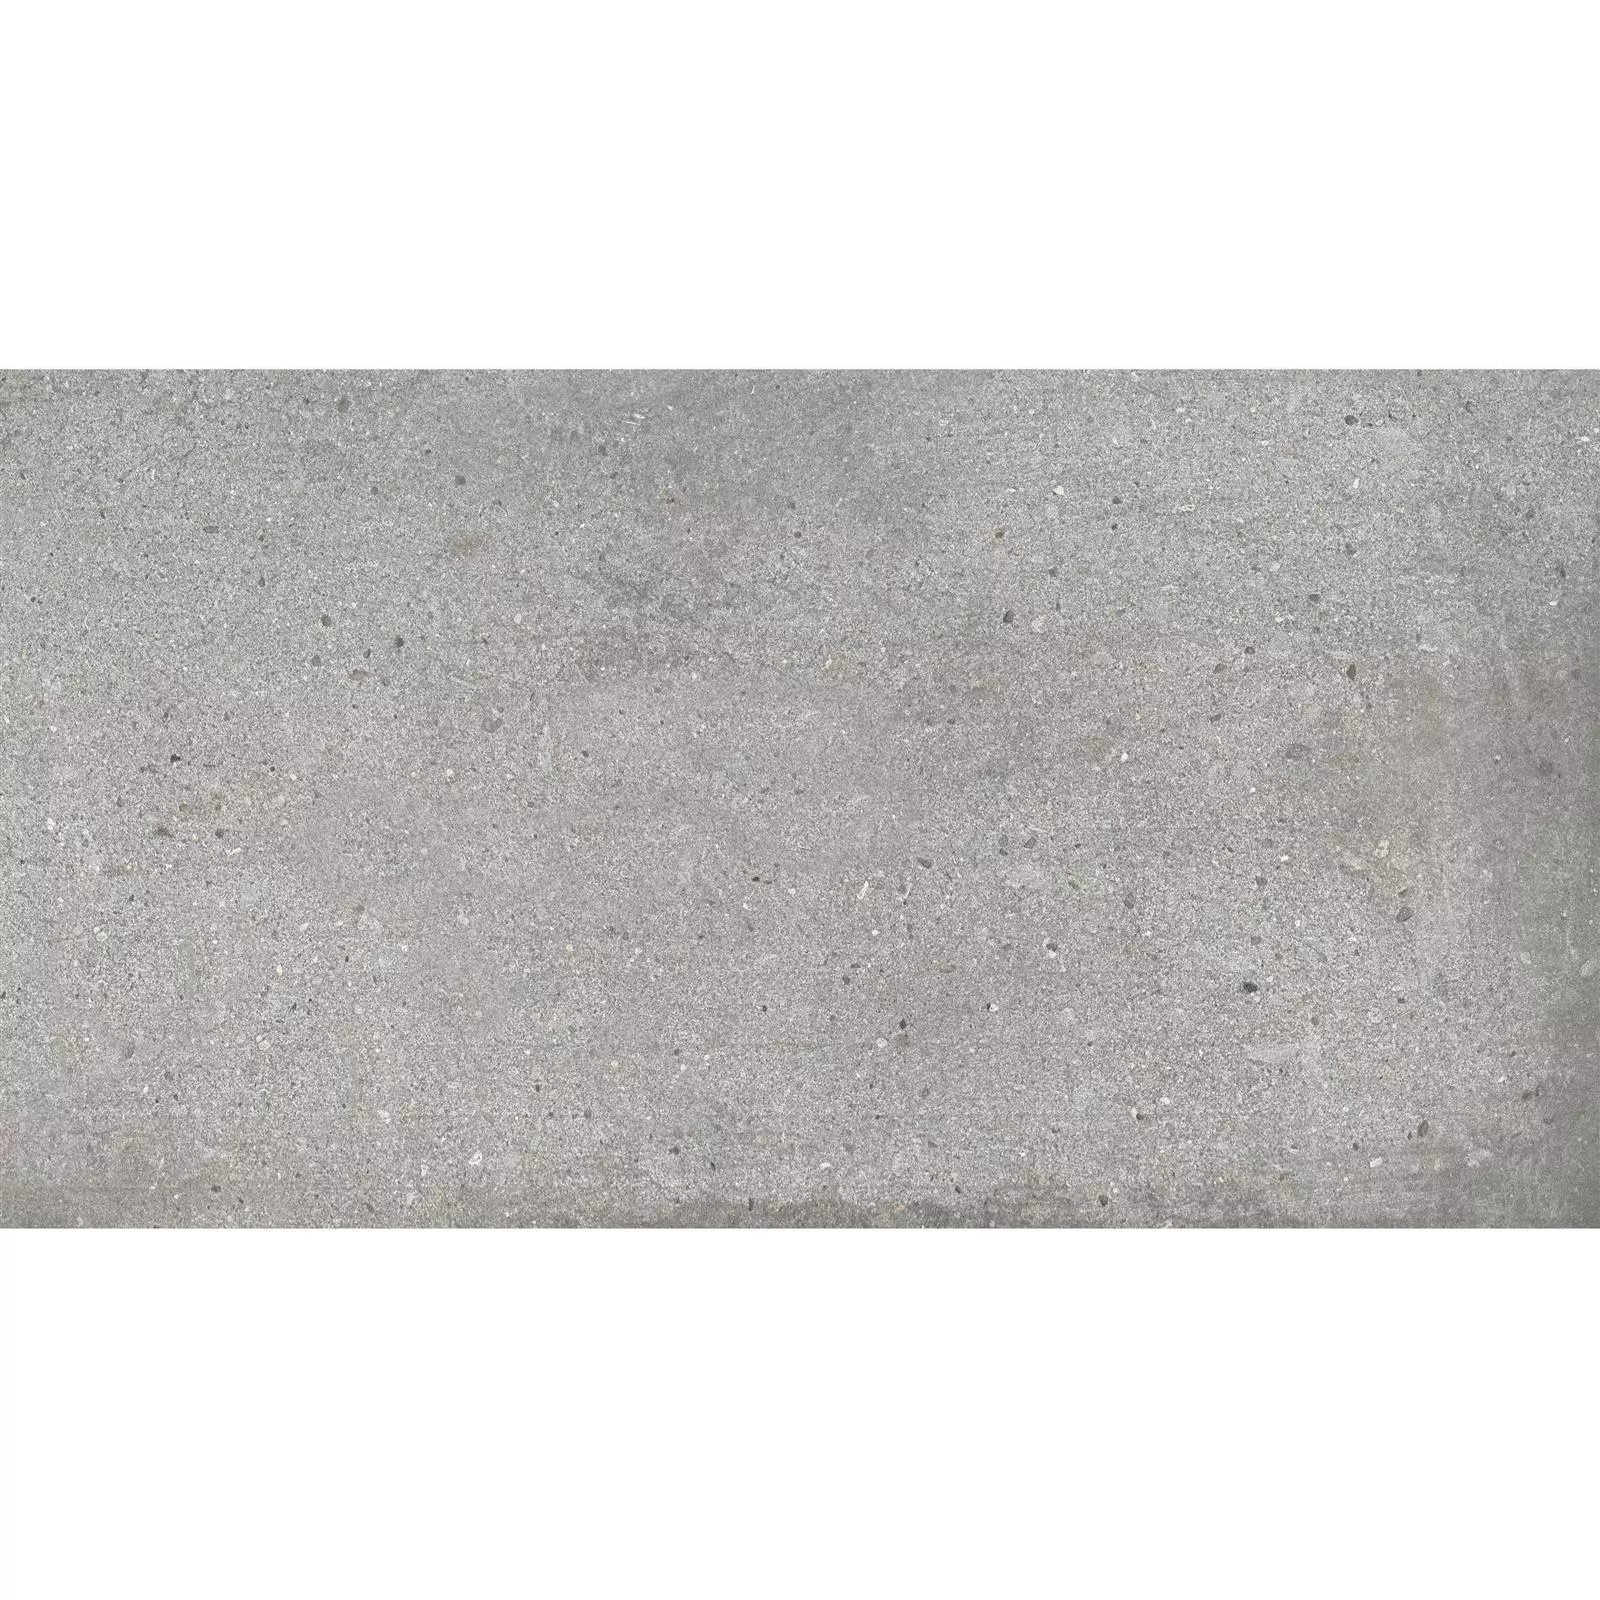 Ladrilhos Freeland Olhar de Pedra R10/B Cinza 30x60cm